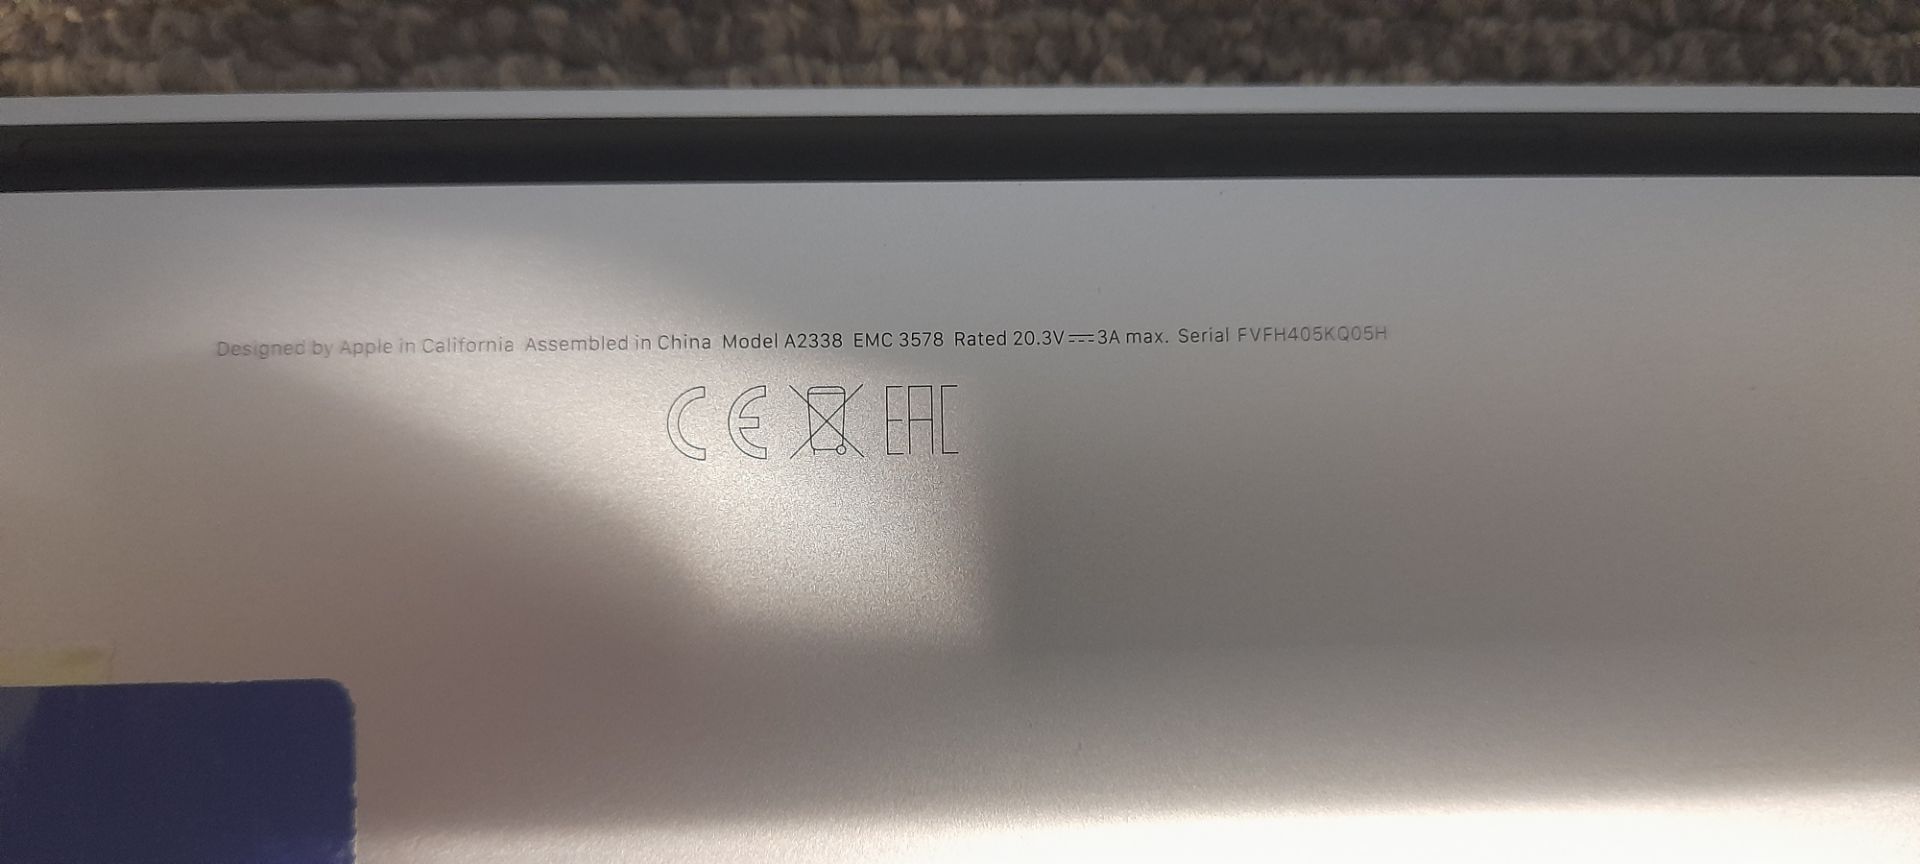 MacBook Pro 13", M1, A2338 EMC 3578, S/N: FVFH405KQ05H - Image 3 of 4